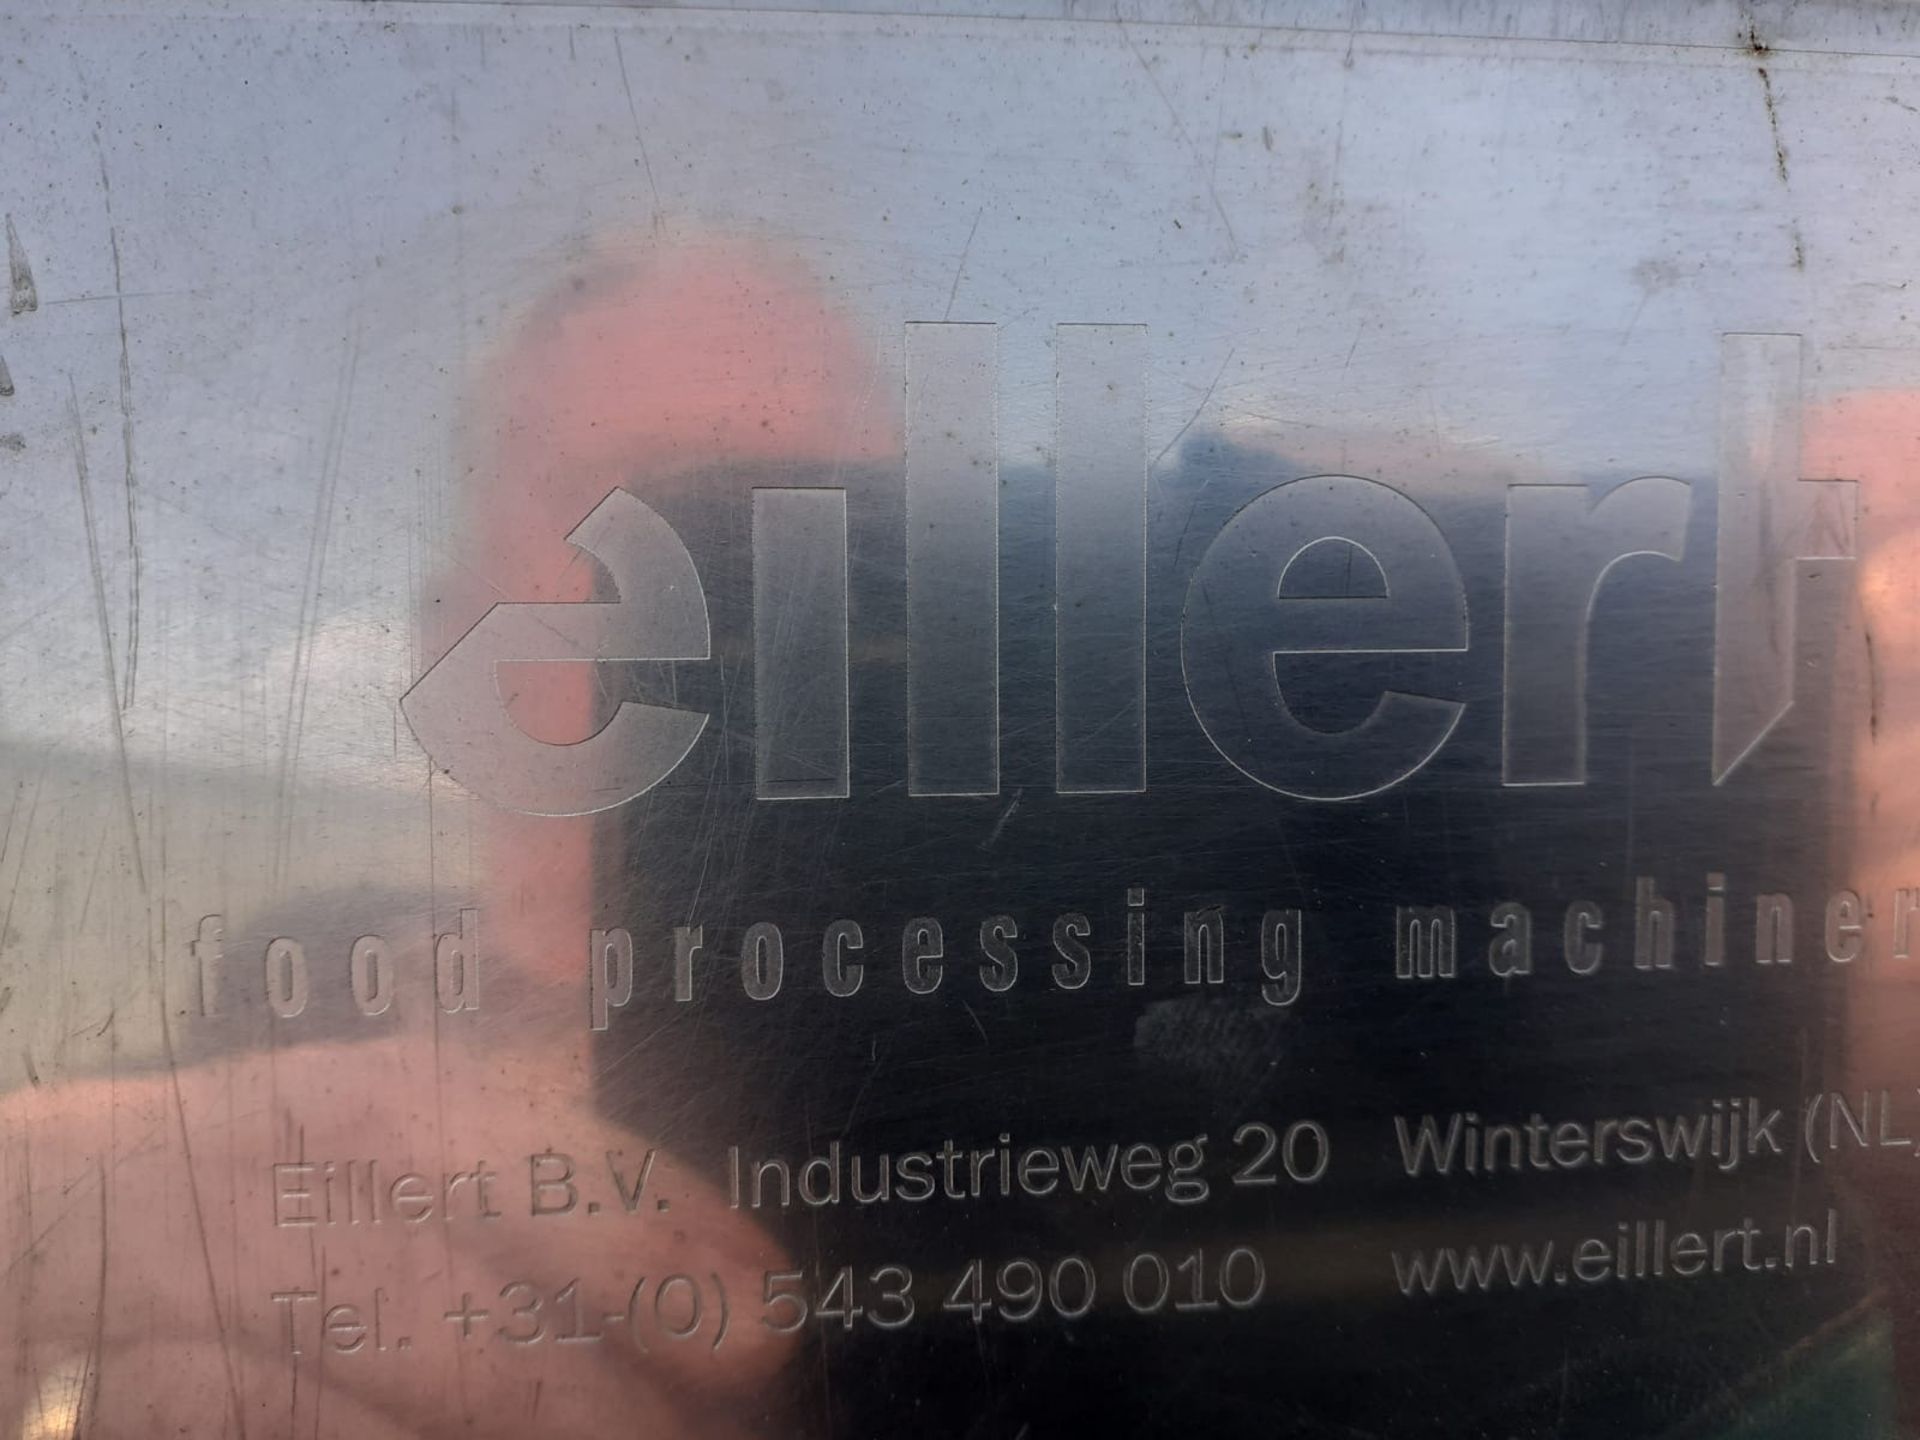 Eillert slicer - Image 2 of 3